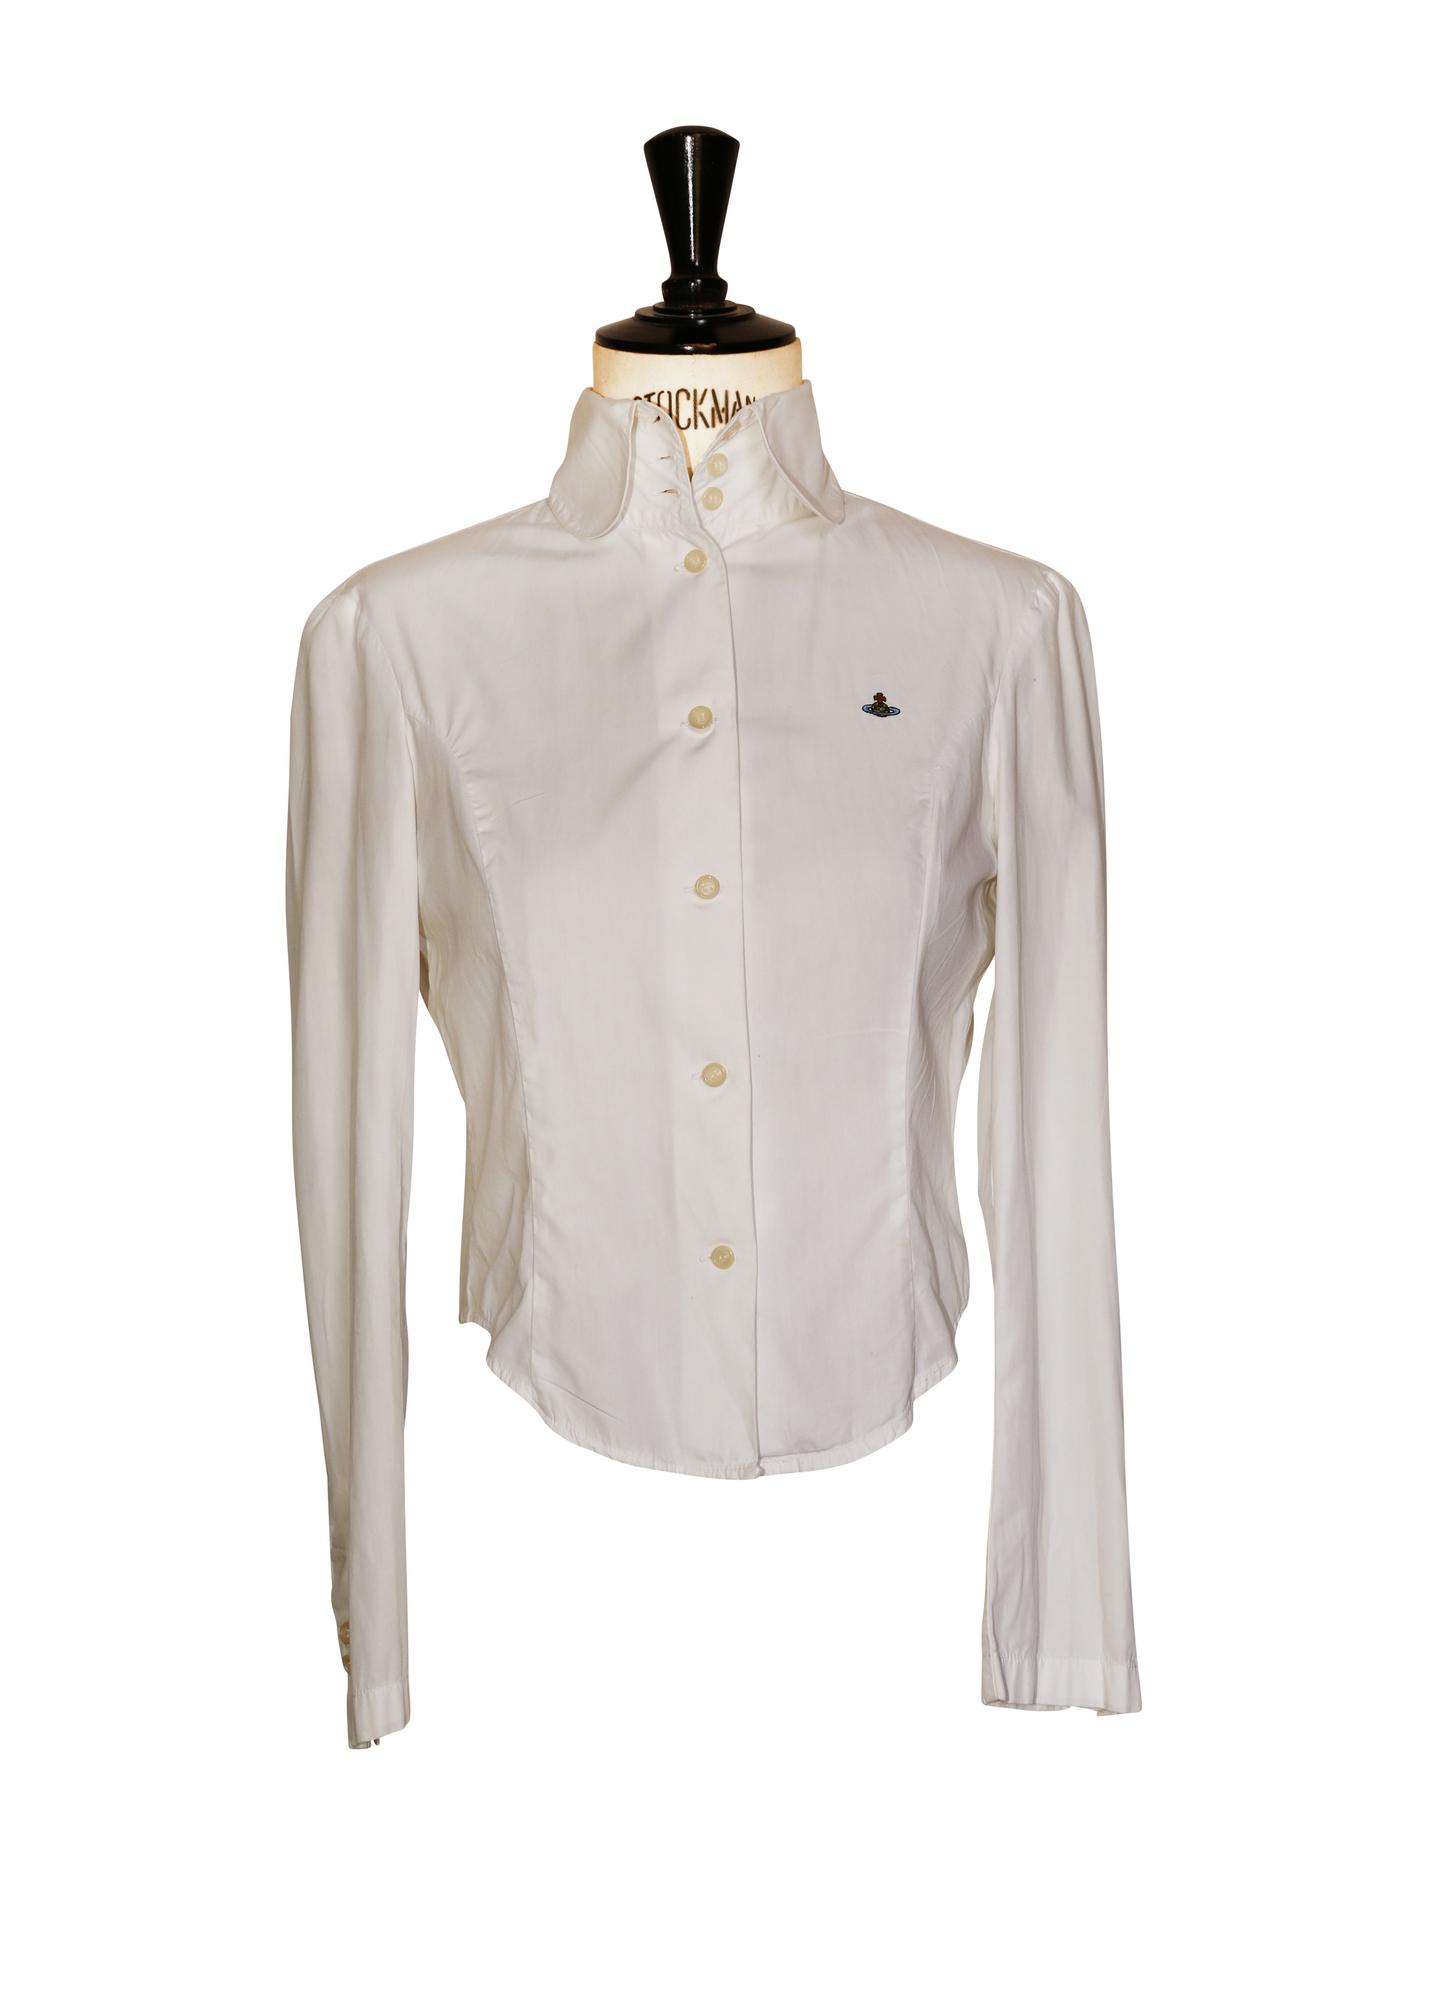 Vivienne Westwood KRALL WHITE SHIRT Description: Krall model shirt in white...